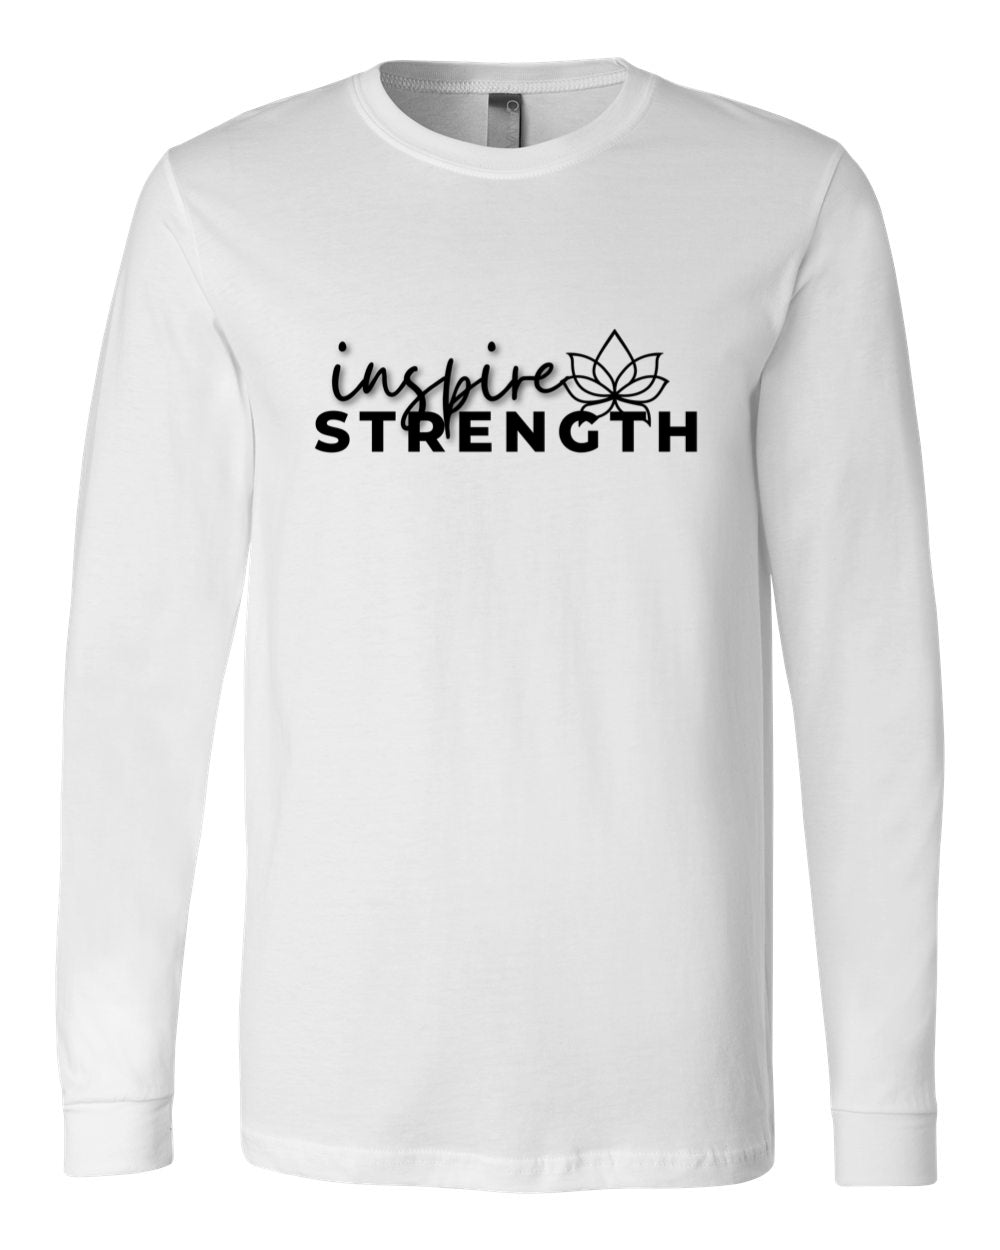 Inspire Strength UNISEX LONG SLEEVE TEE